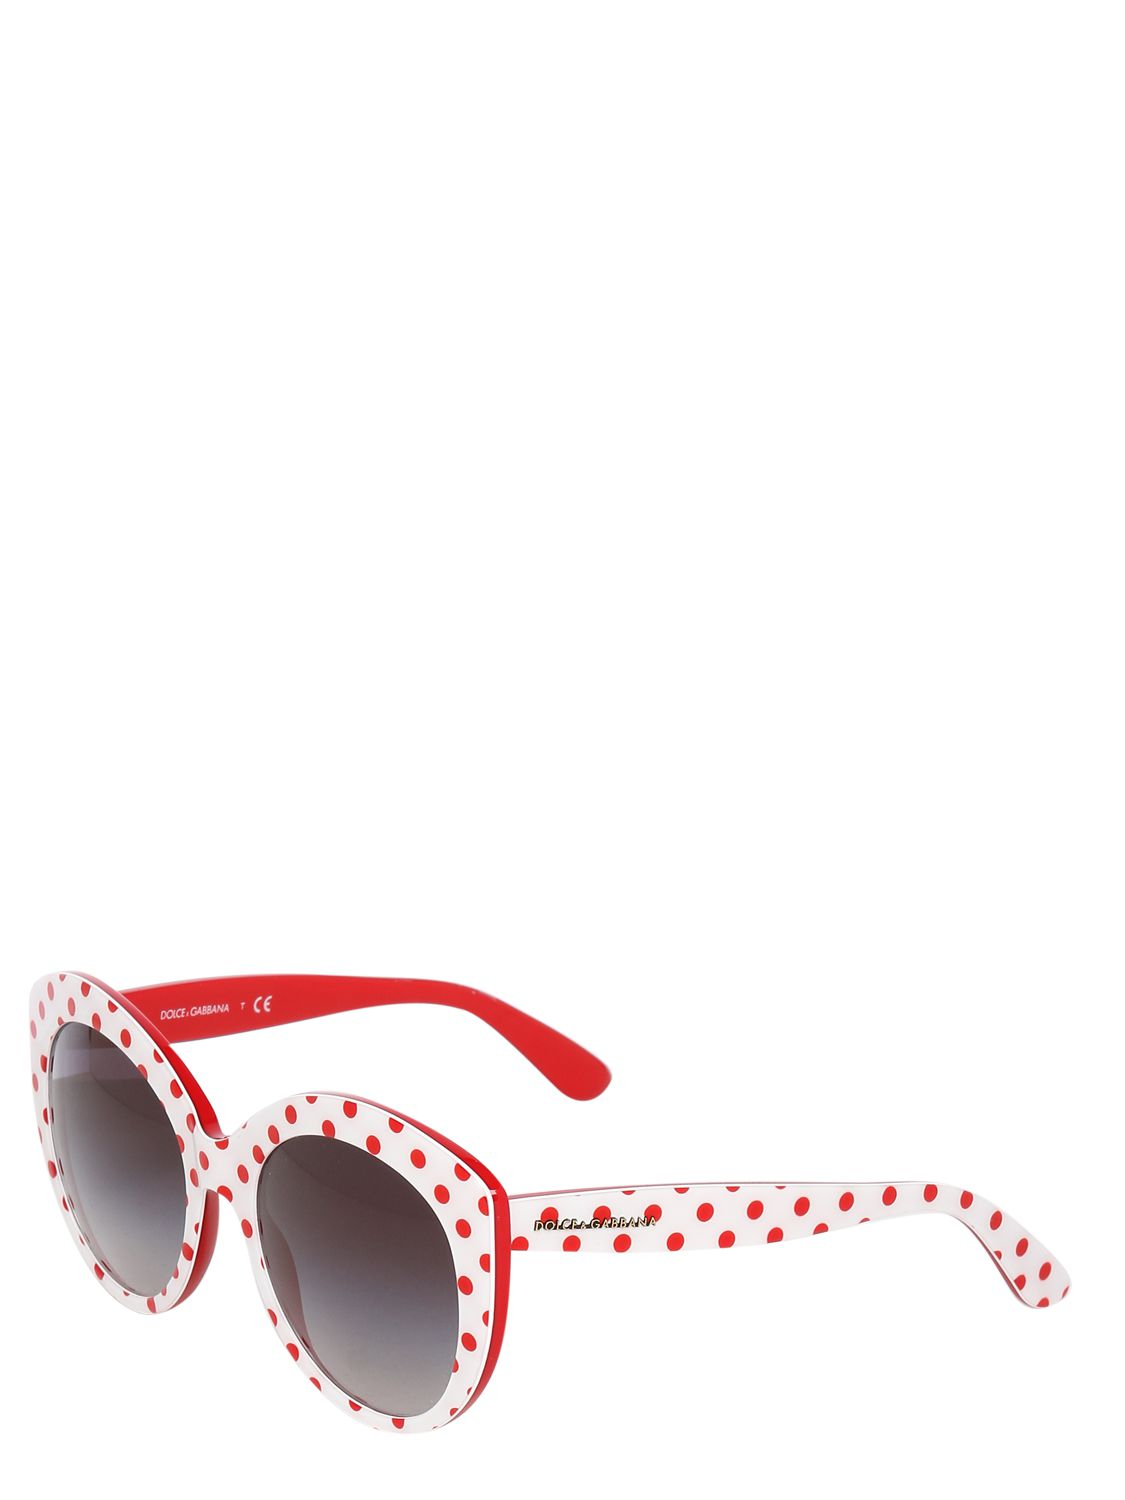 Dolce & Gabbana Rounded Cat-eye Polka Dot Sunglasses in Red | Lyst